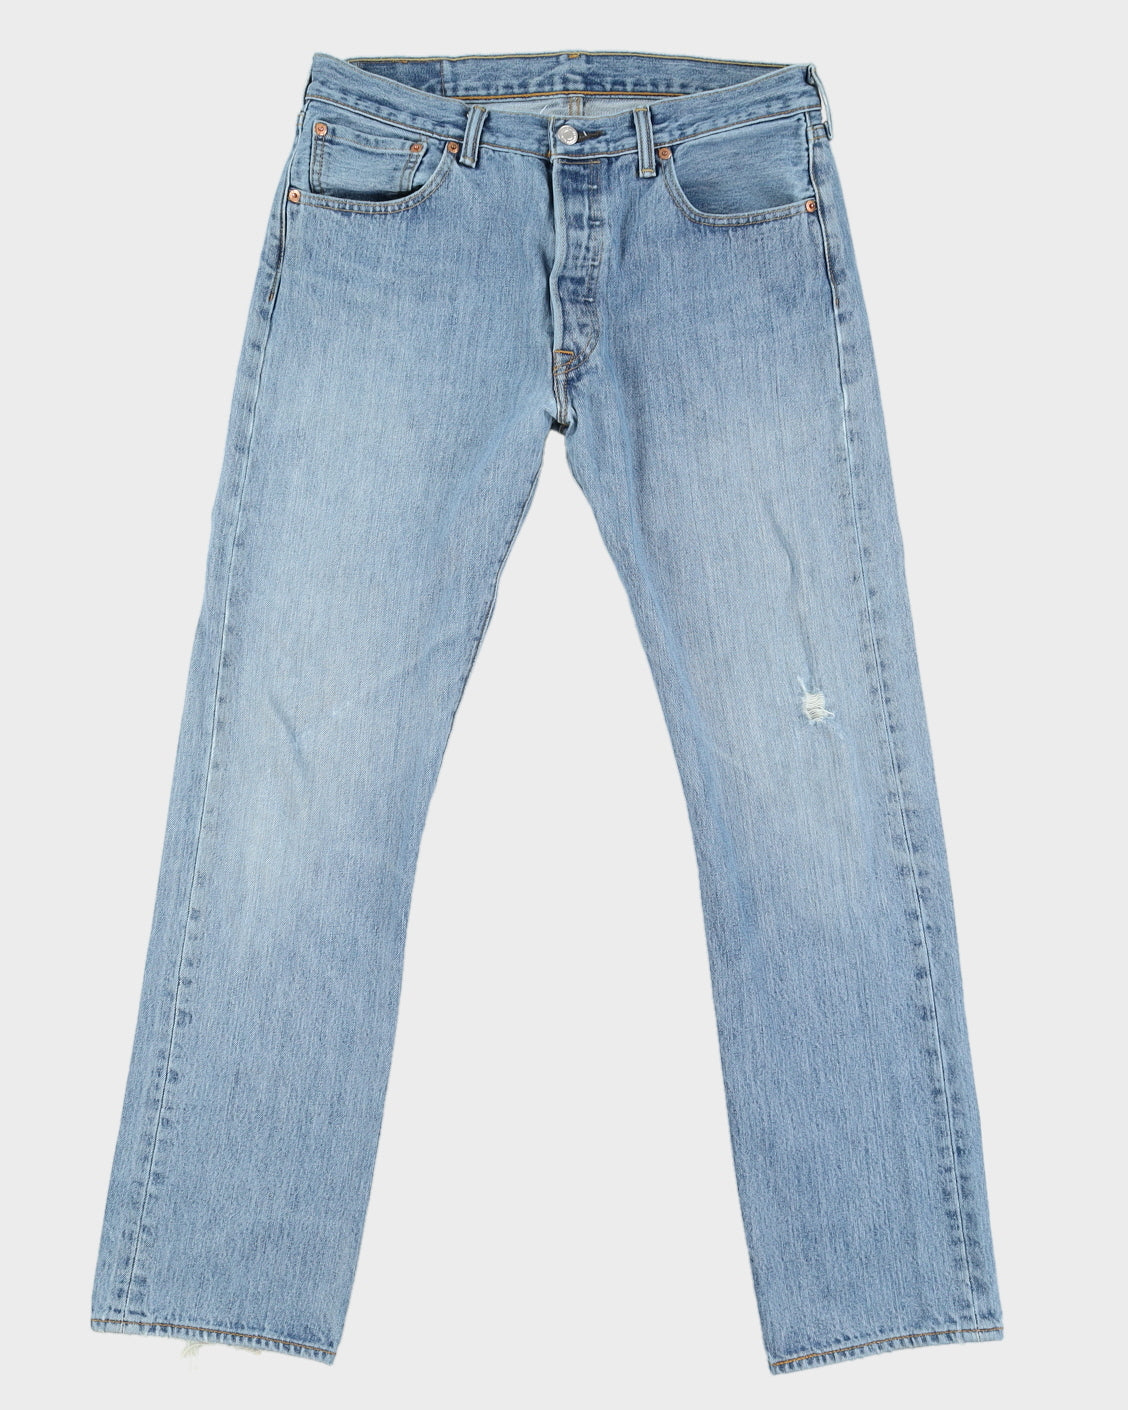 Levi's 501 Blue Light Washed Blank Tab Jeans - W35 L32